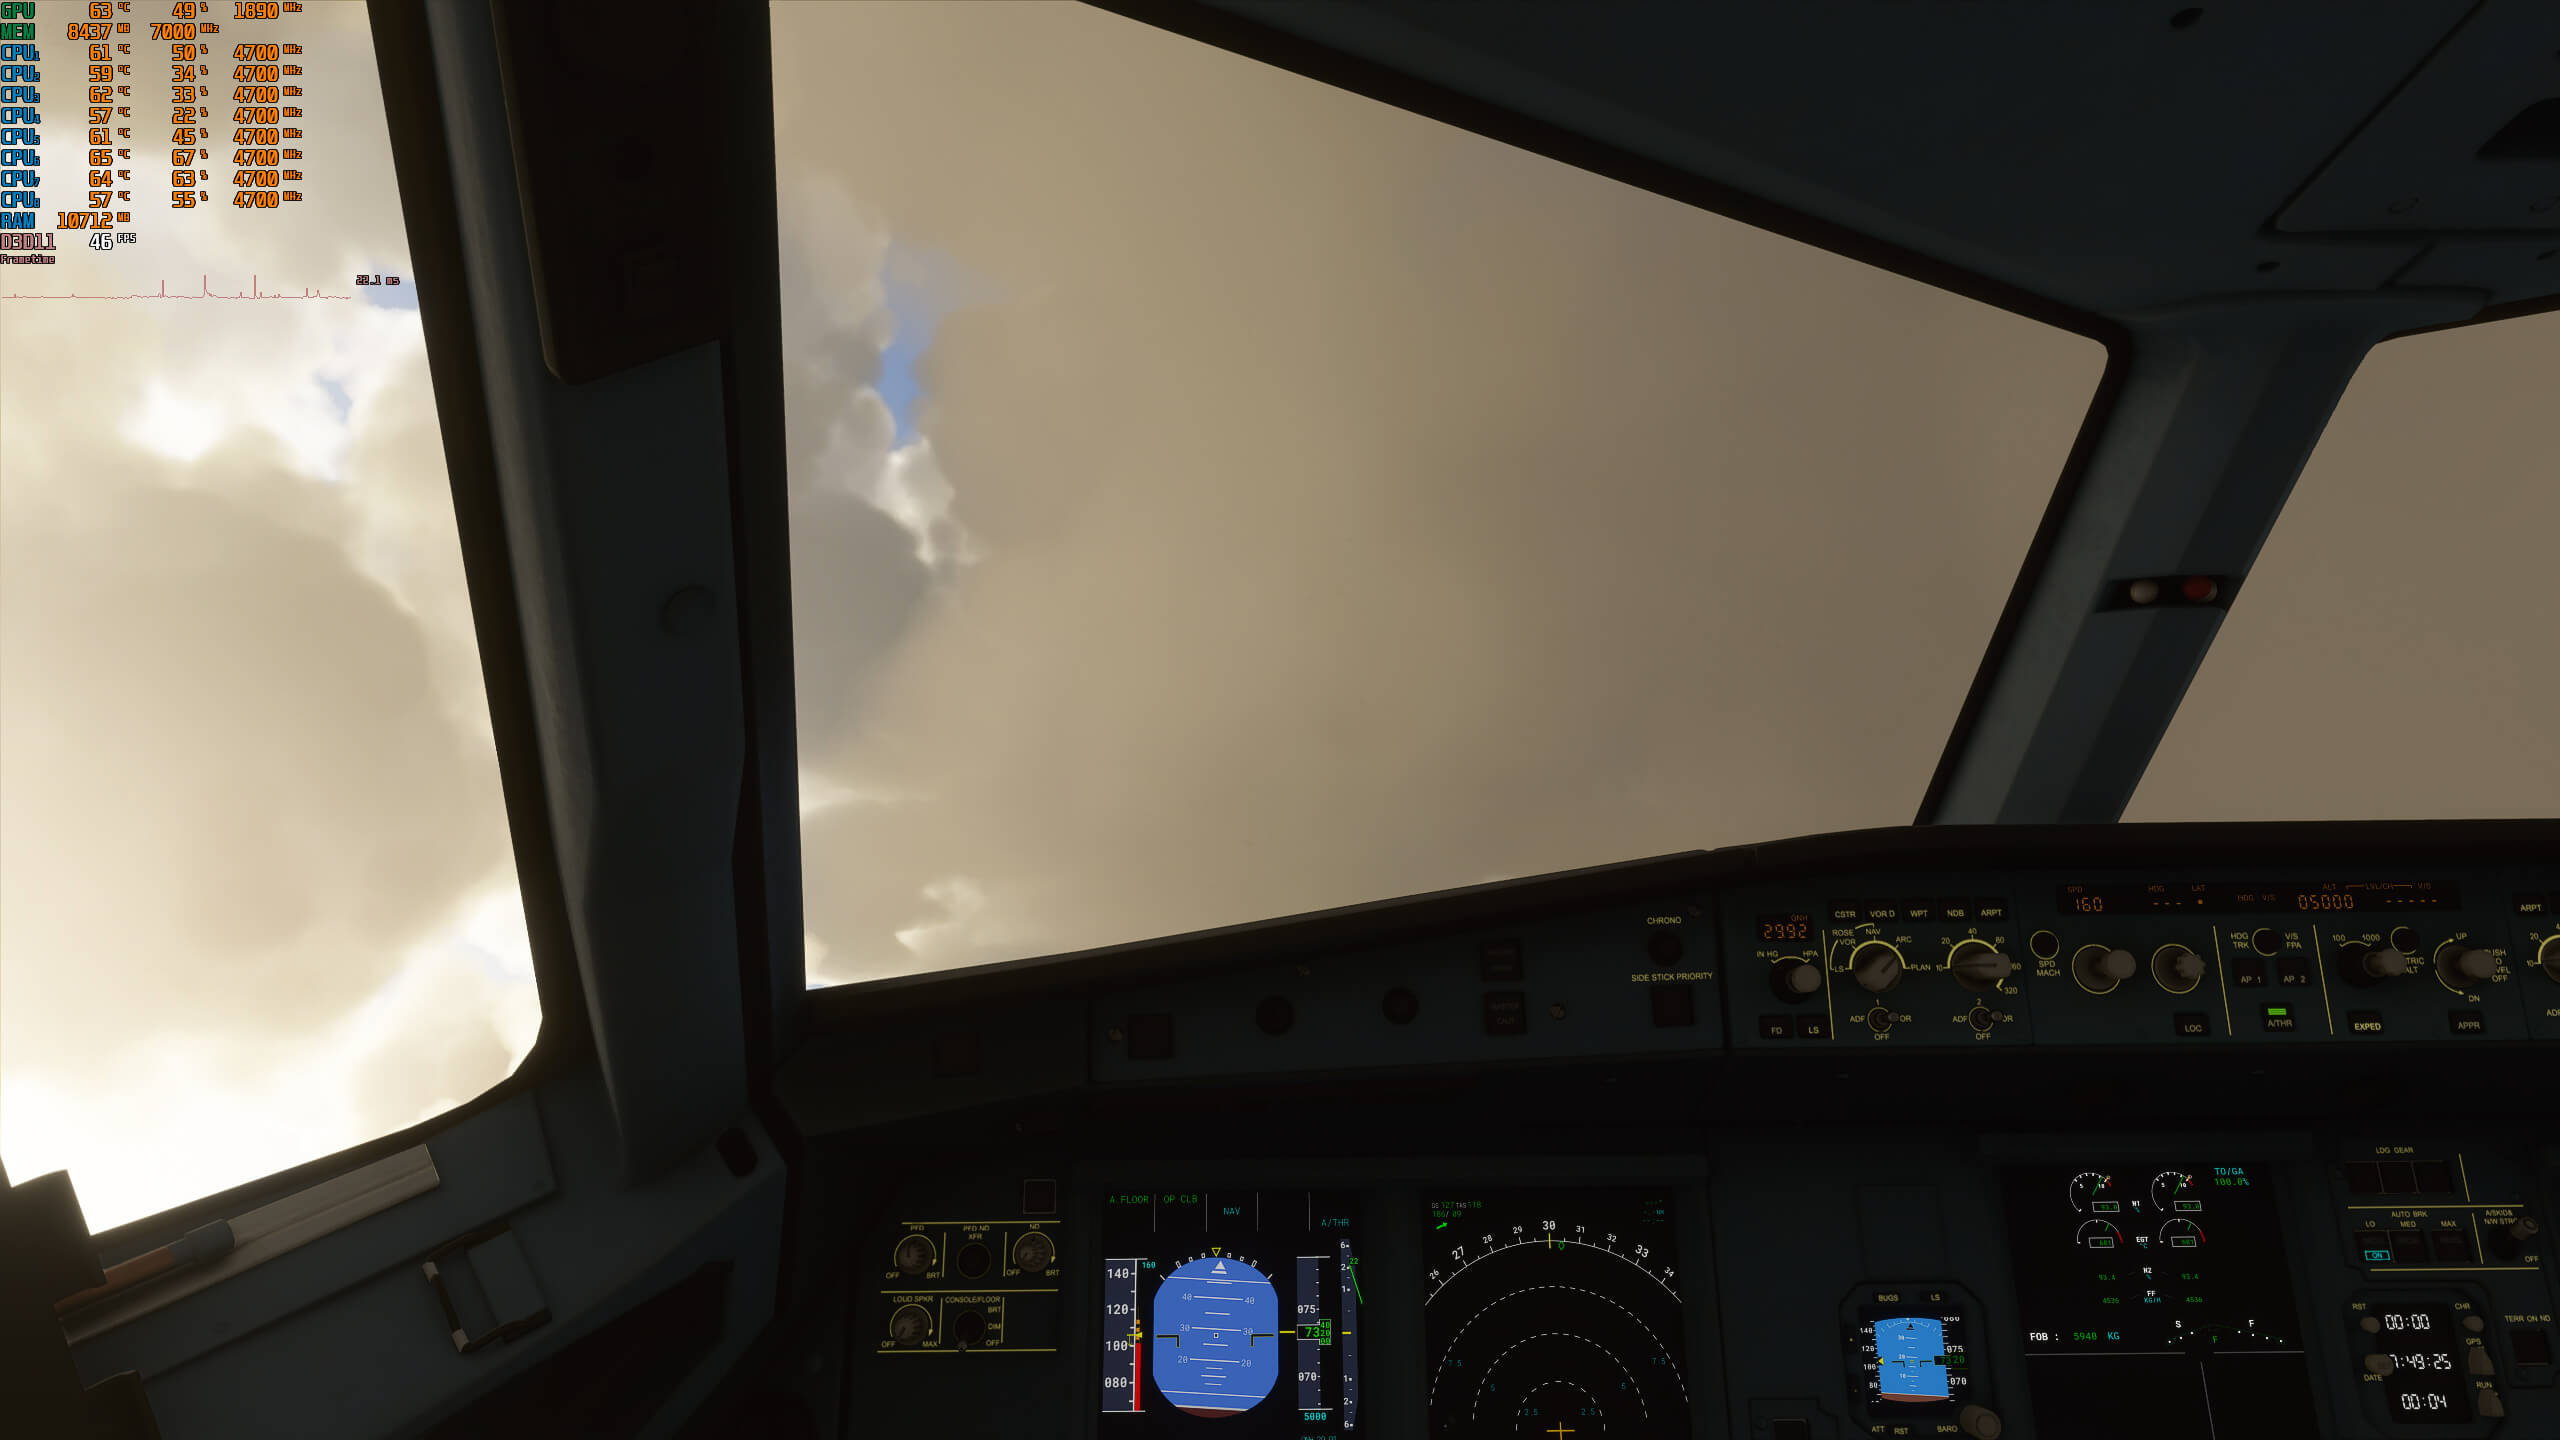 latest microsoft flight simulator 2016